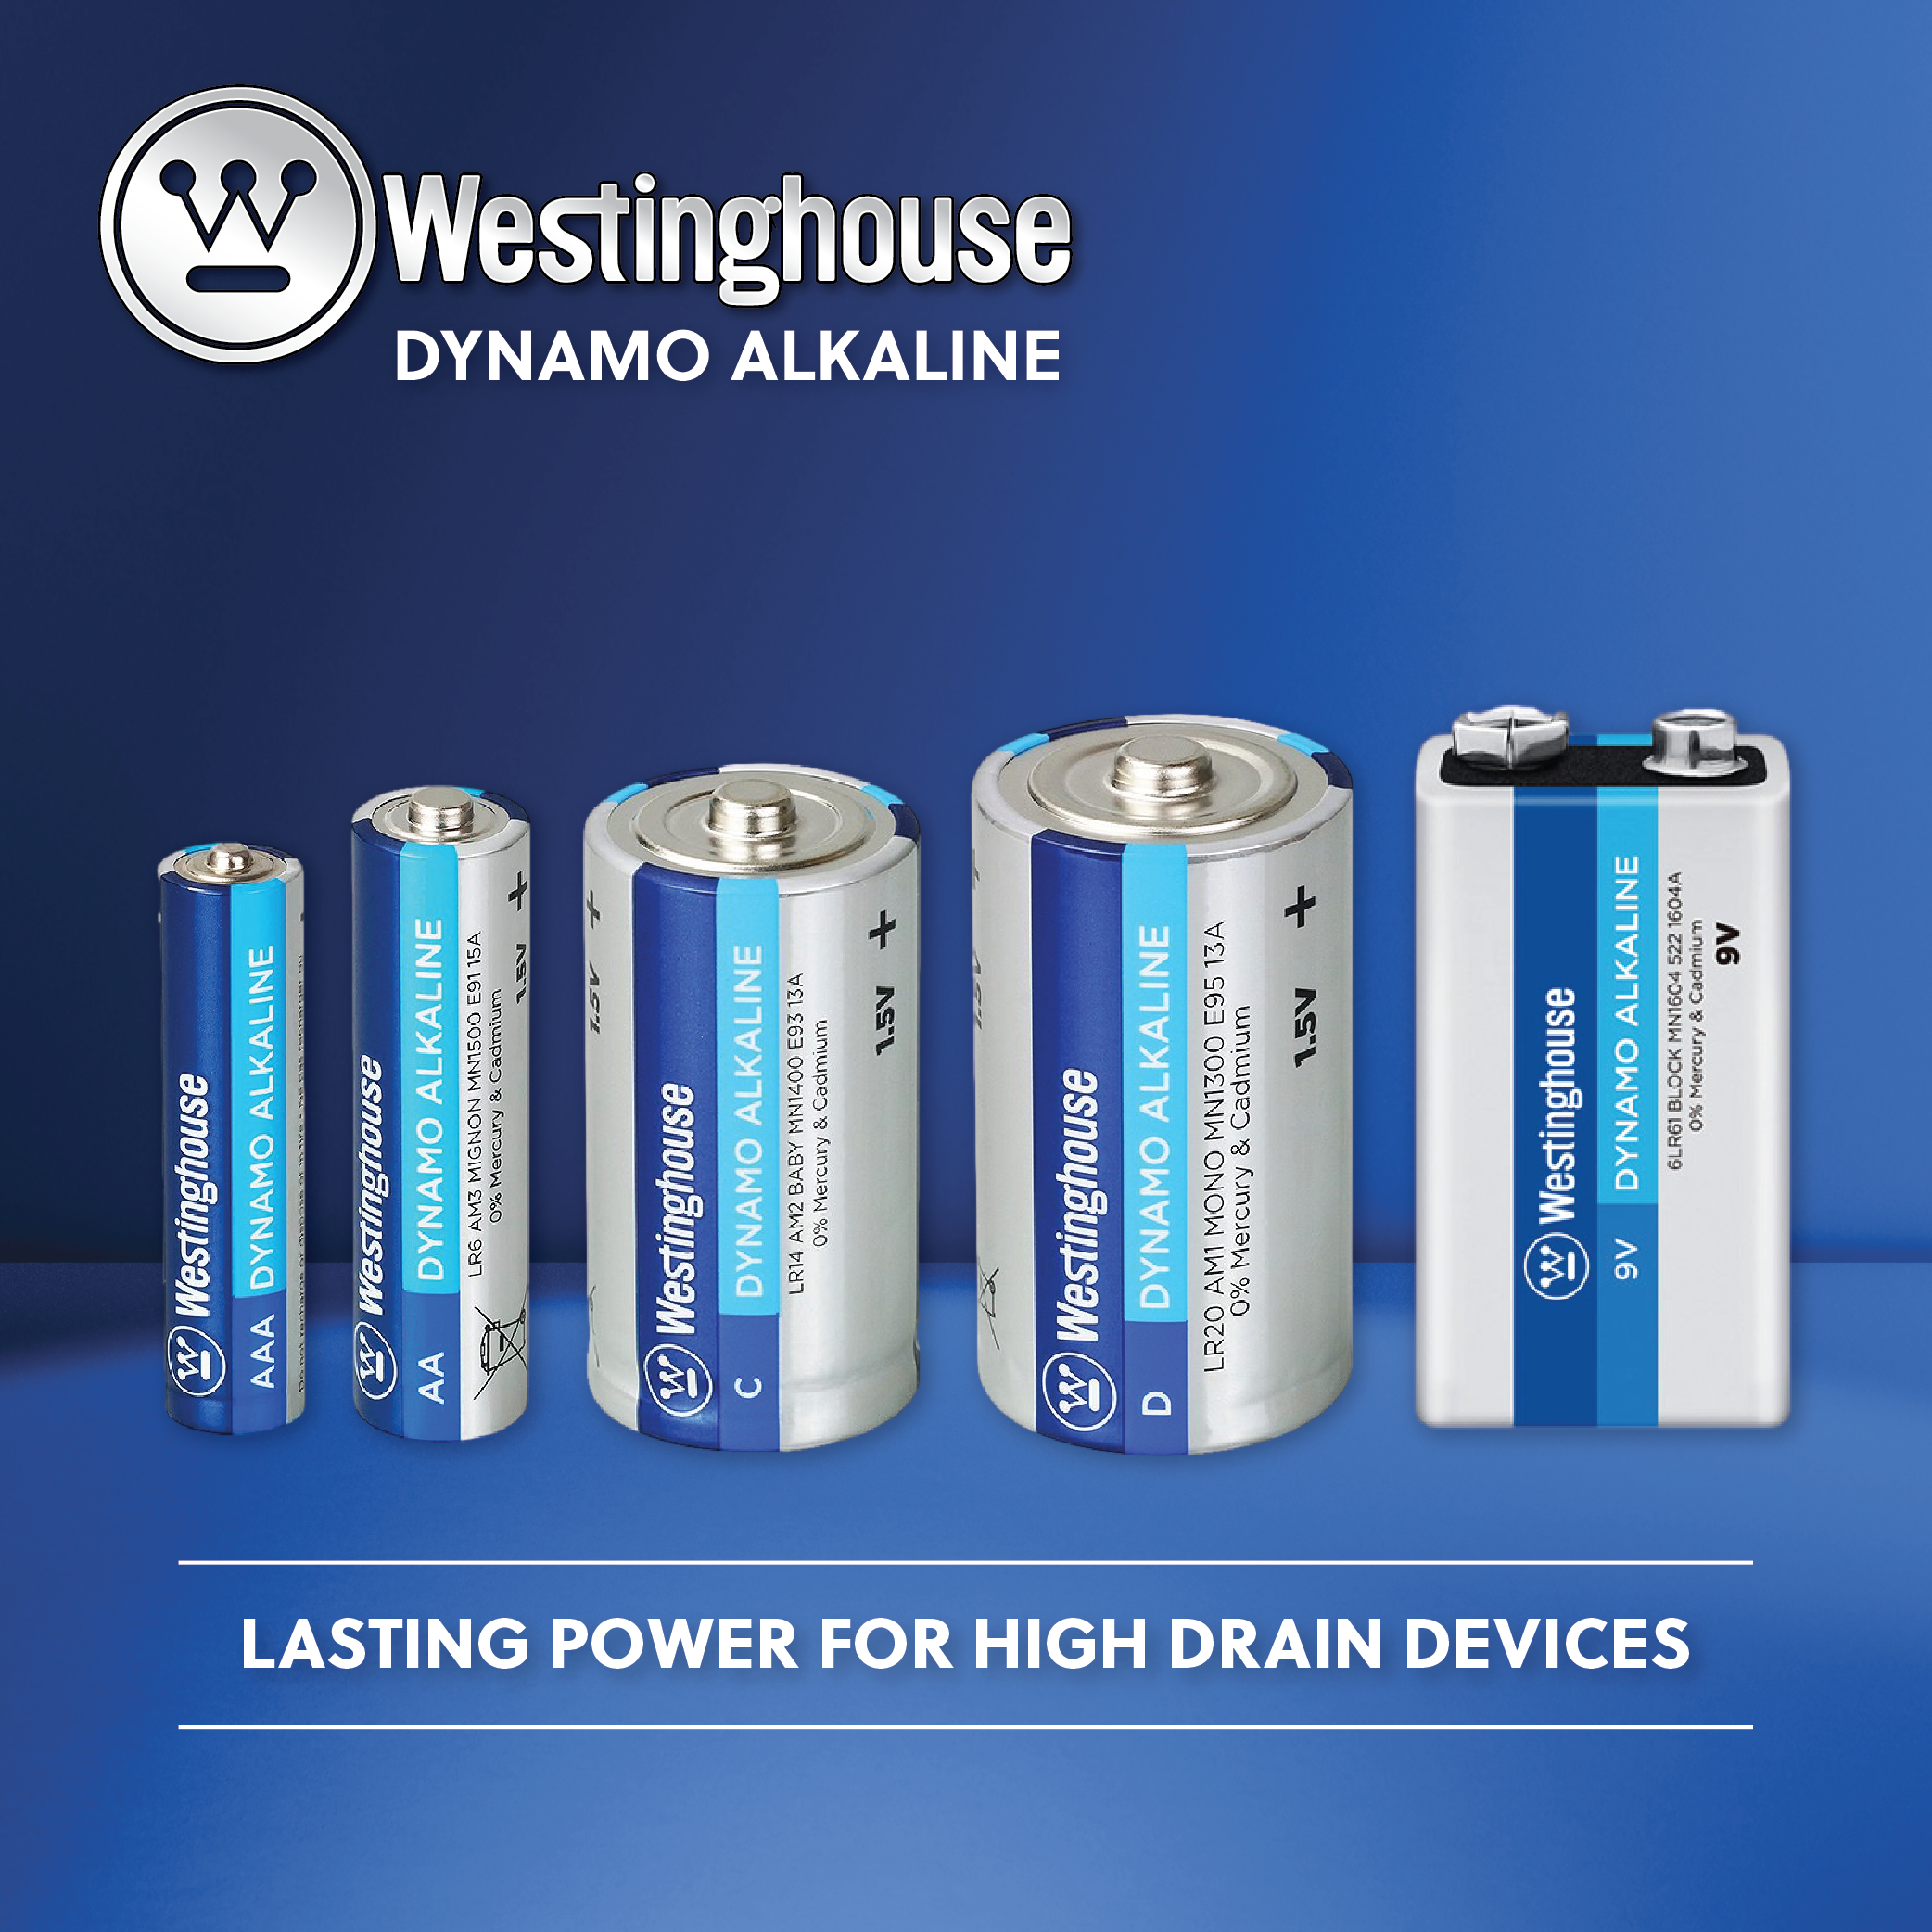 Westinghouse AA Dynamo Alkaline 24 Pack Box